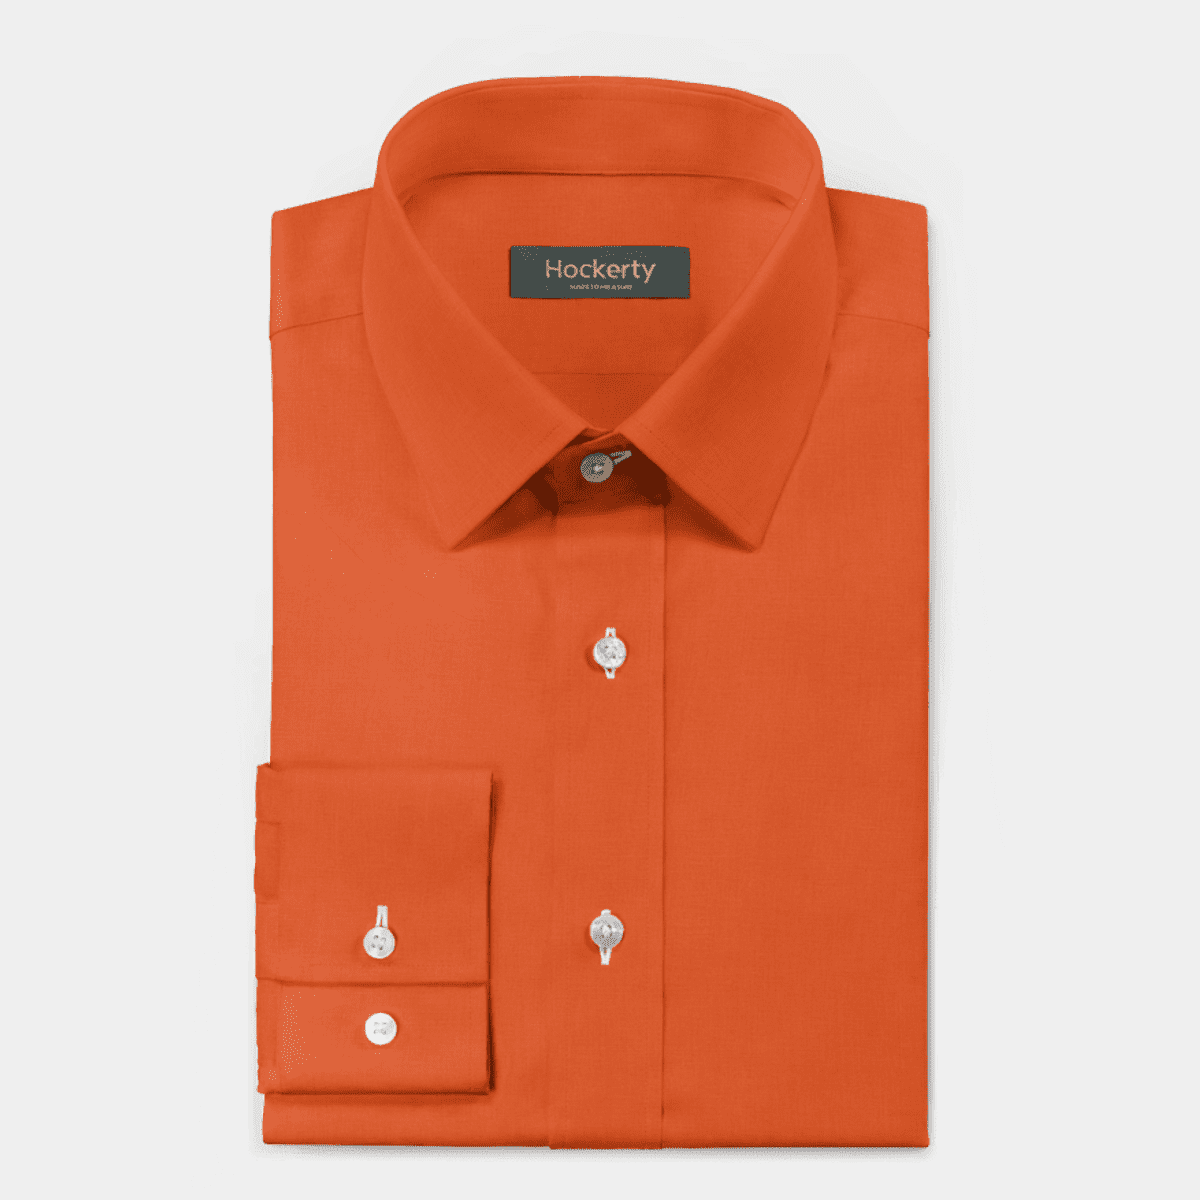 Orange linen-cotton dress Shirt